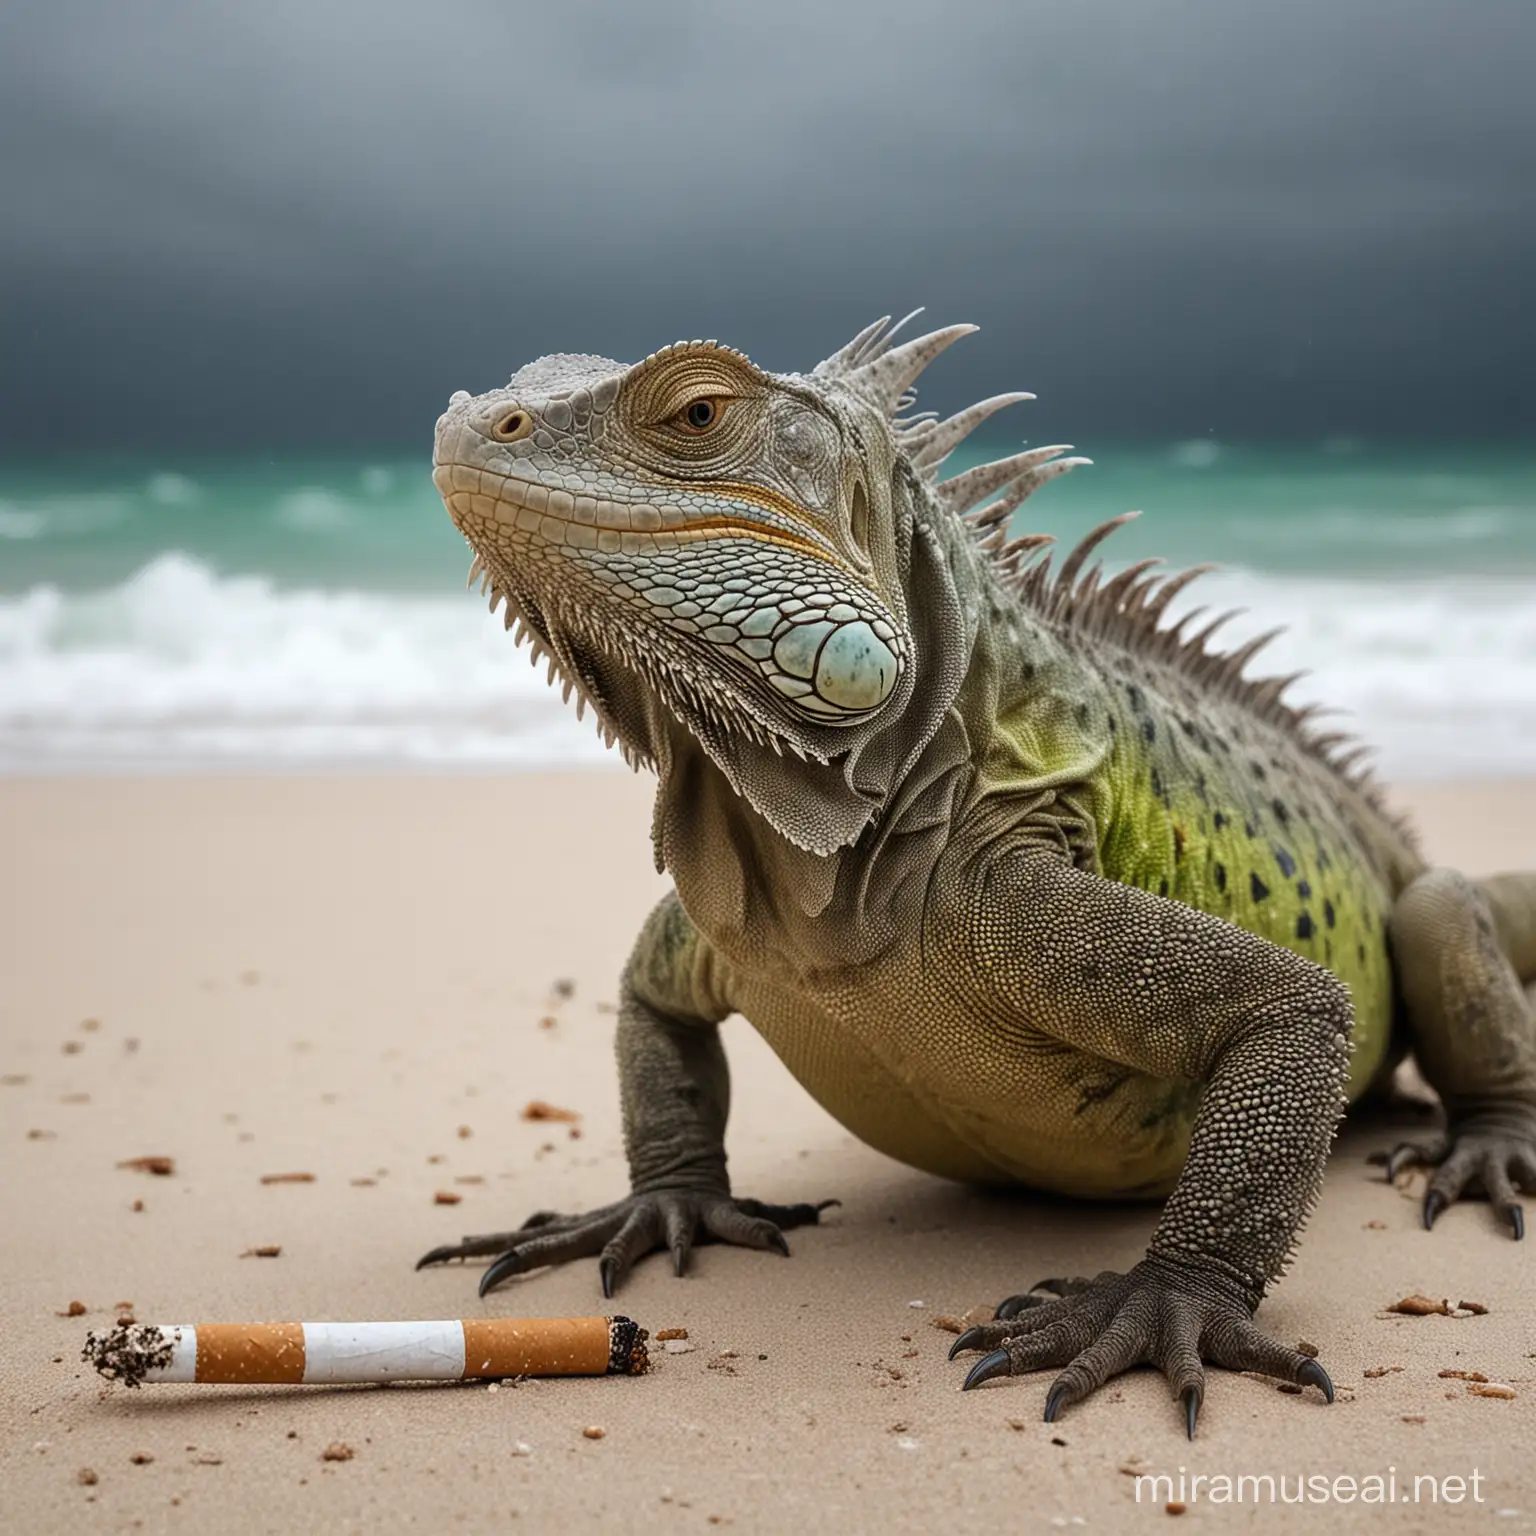 Iguana on Winter Beach Smoking Cigarette Under Stormy Sky